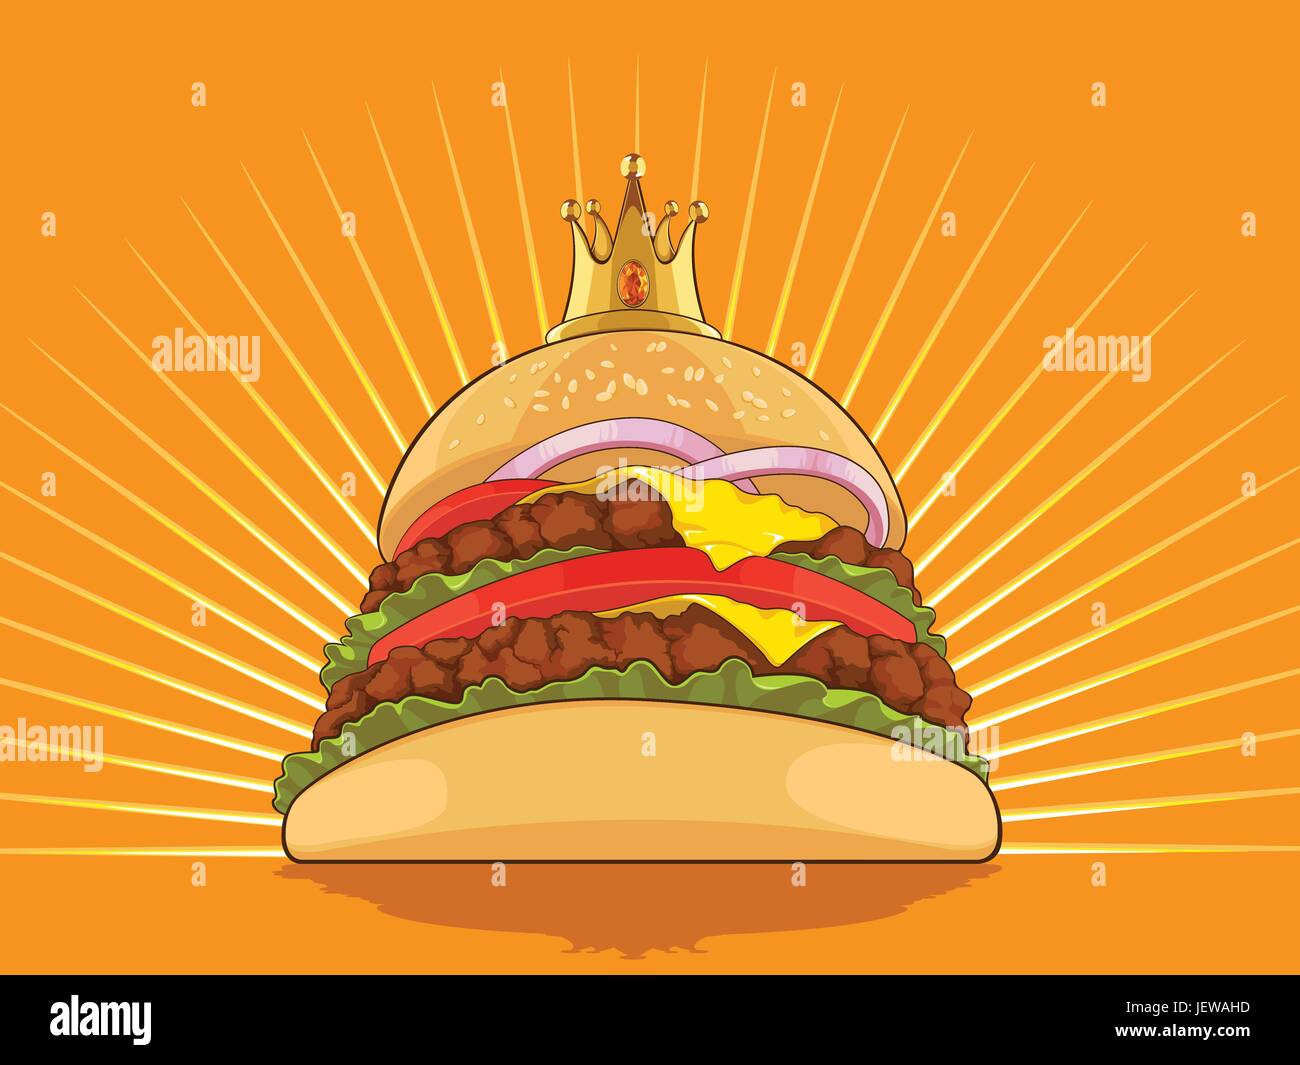 food, aliment, dish, meal, hamburger, burger, supper, dinner, cheeseburger, Stock Vector